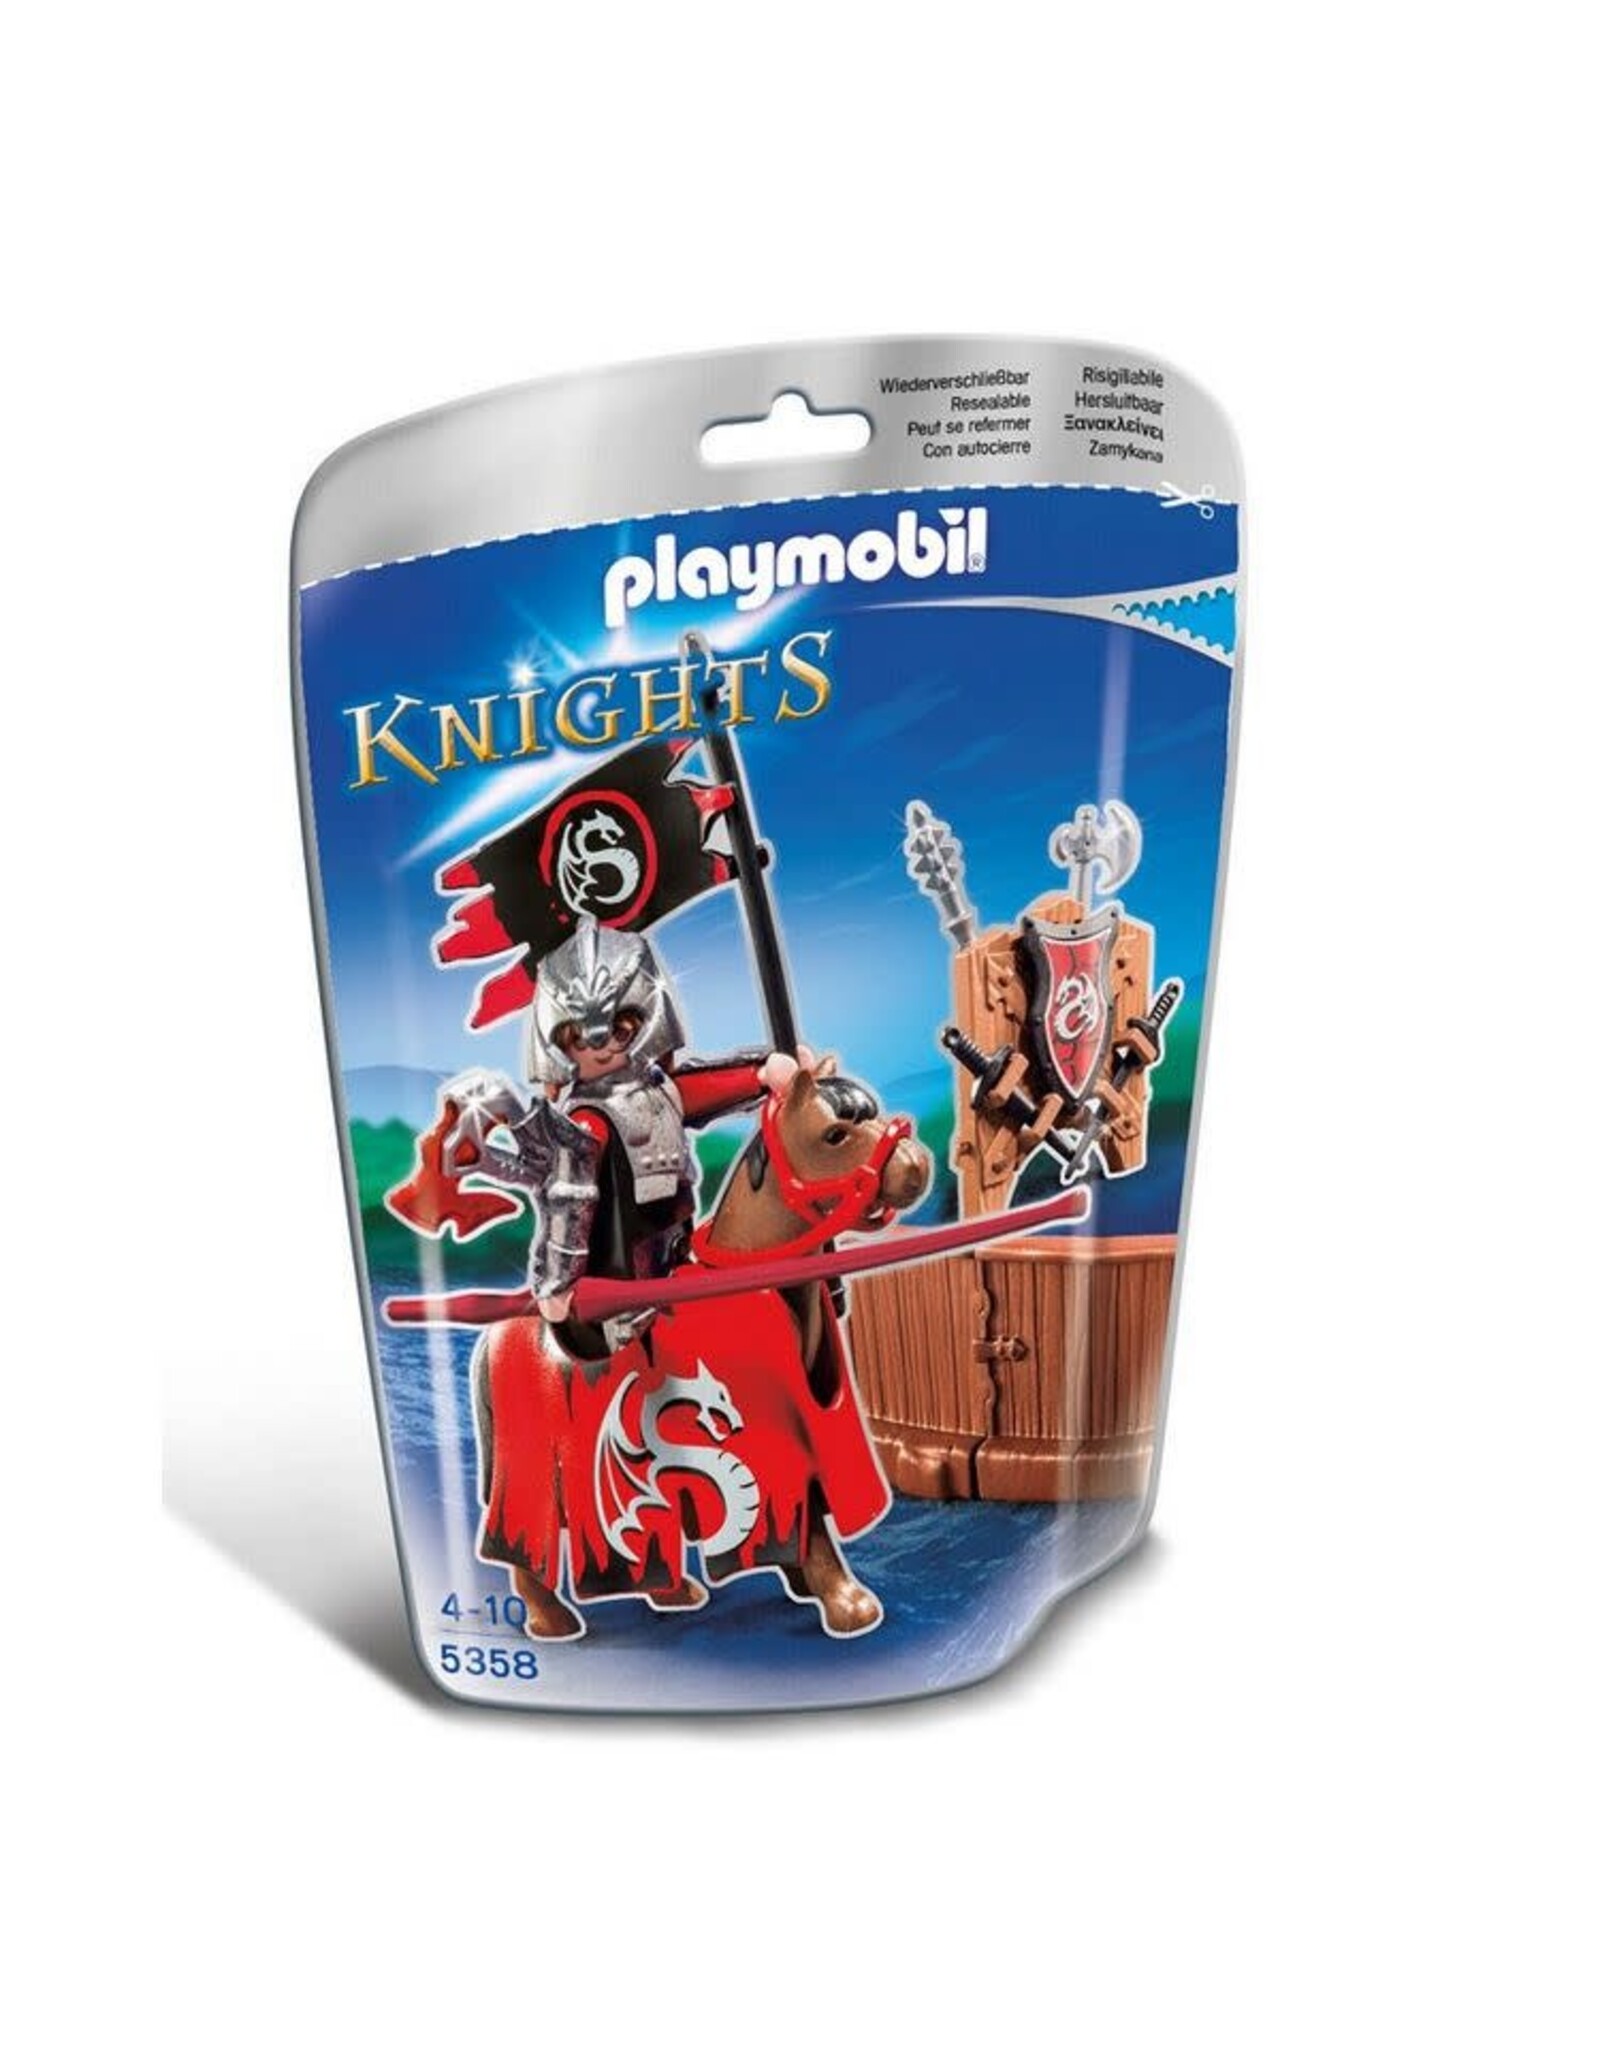 Playmobil Playmobil Knights 5358 Toernooiridder van de Orde van de Draak